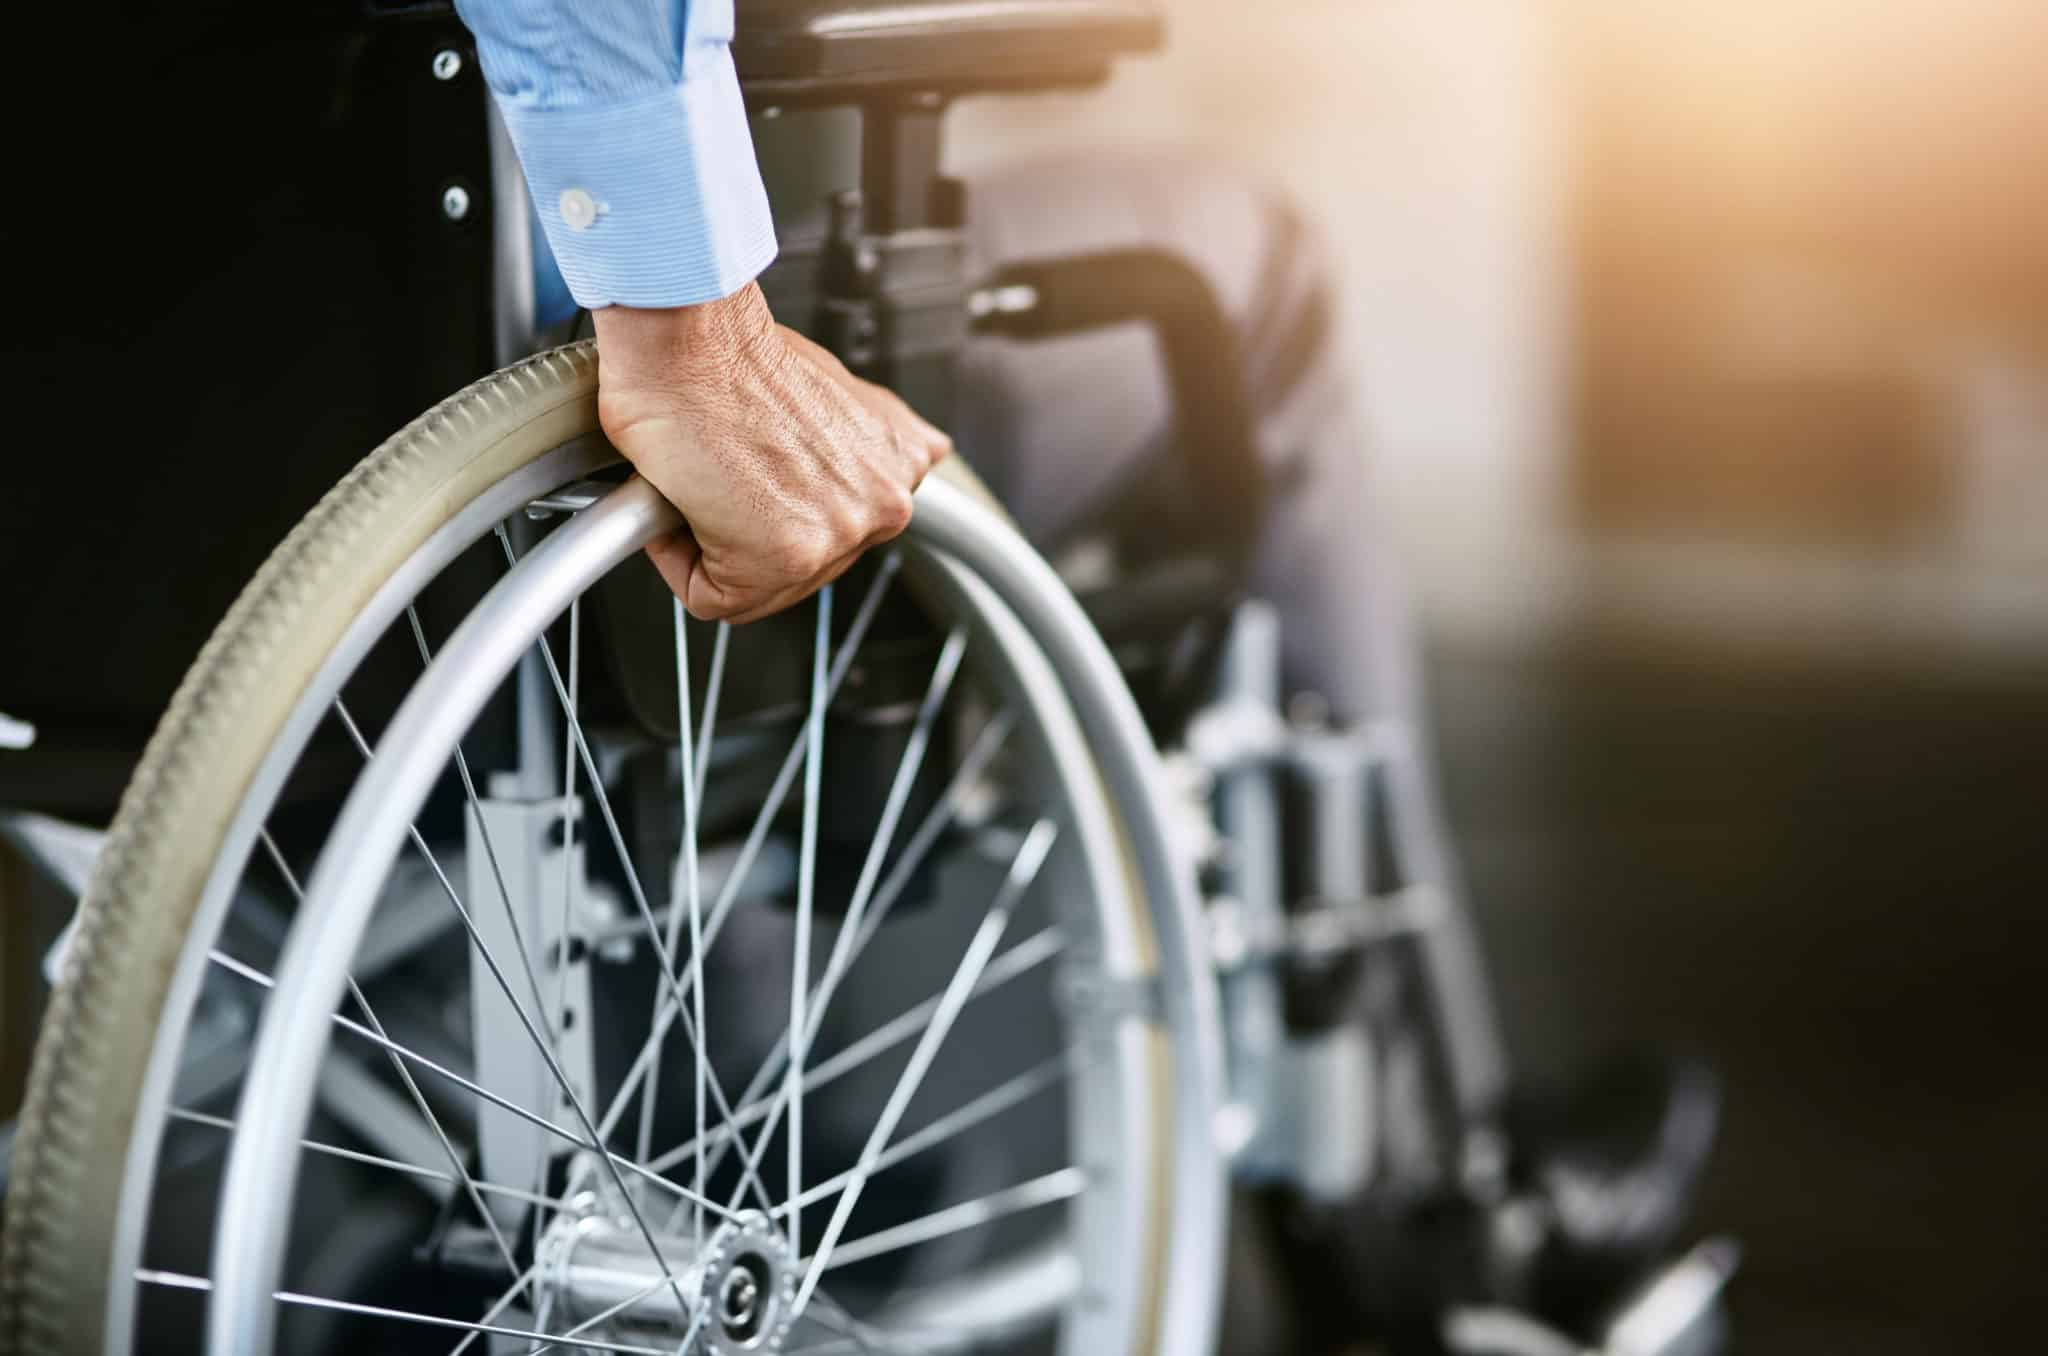 Wheelchair user's hand on wheel